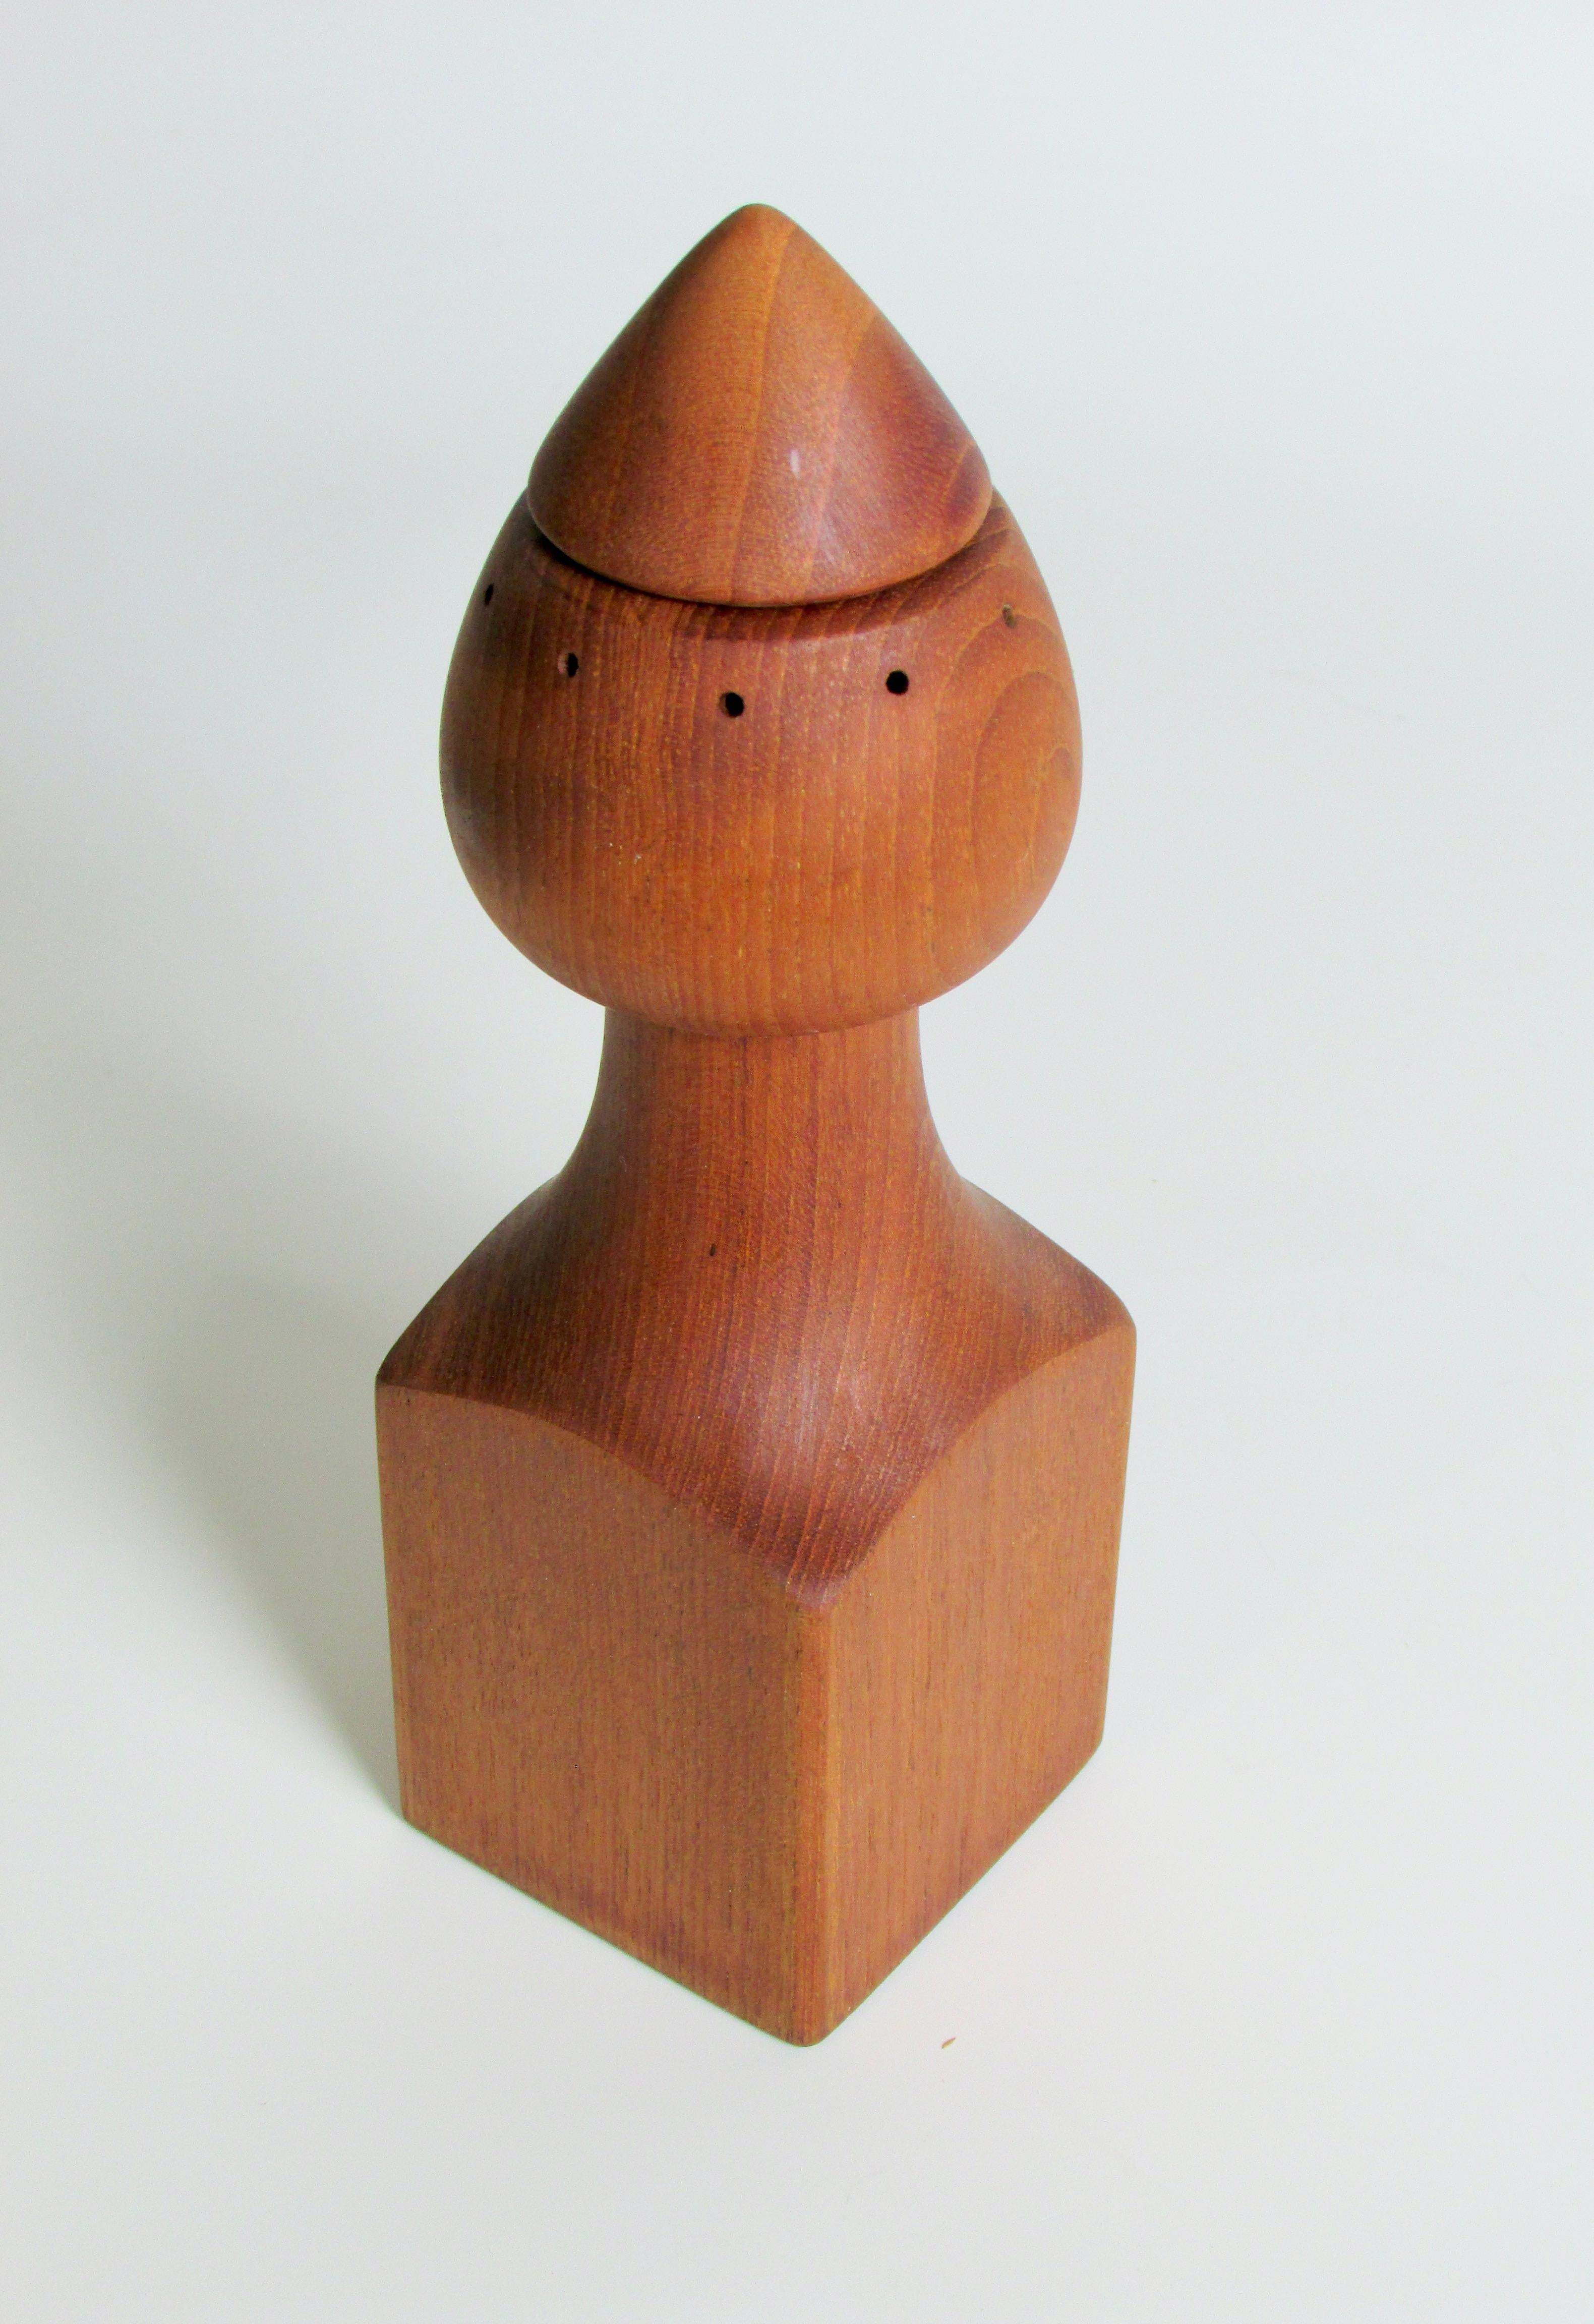 Wood Rare Jens Quistgaard Dansk Design Denmark Salt Shaker Peppermill For Sale